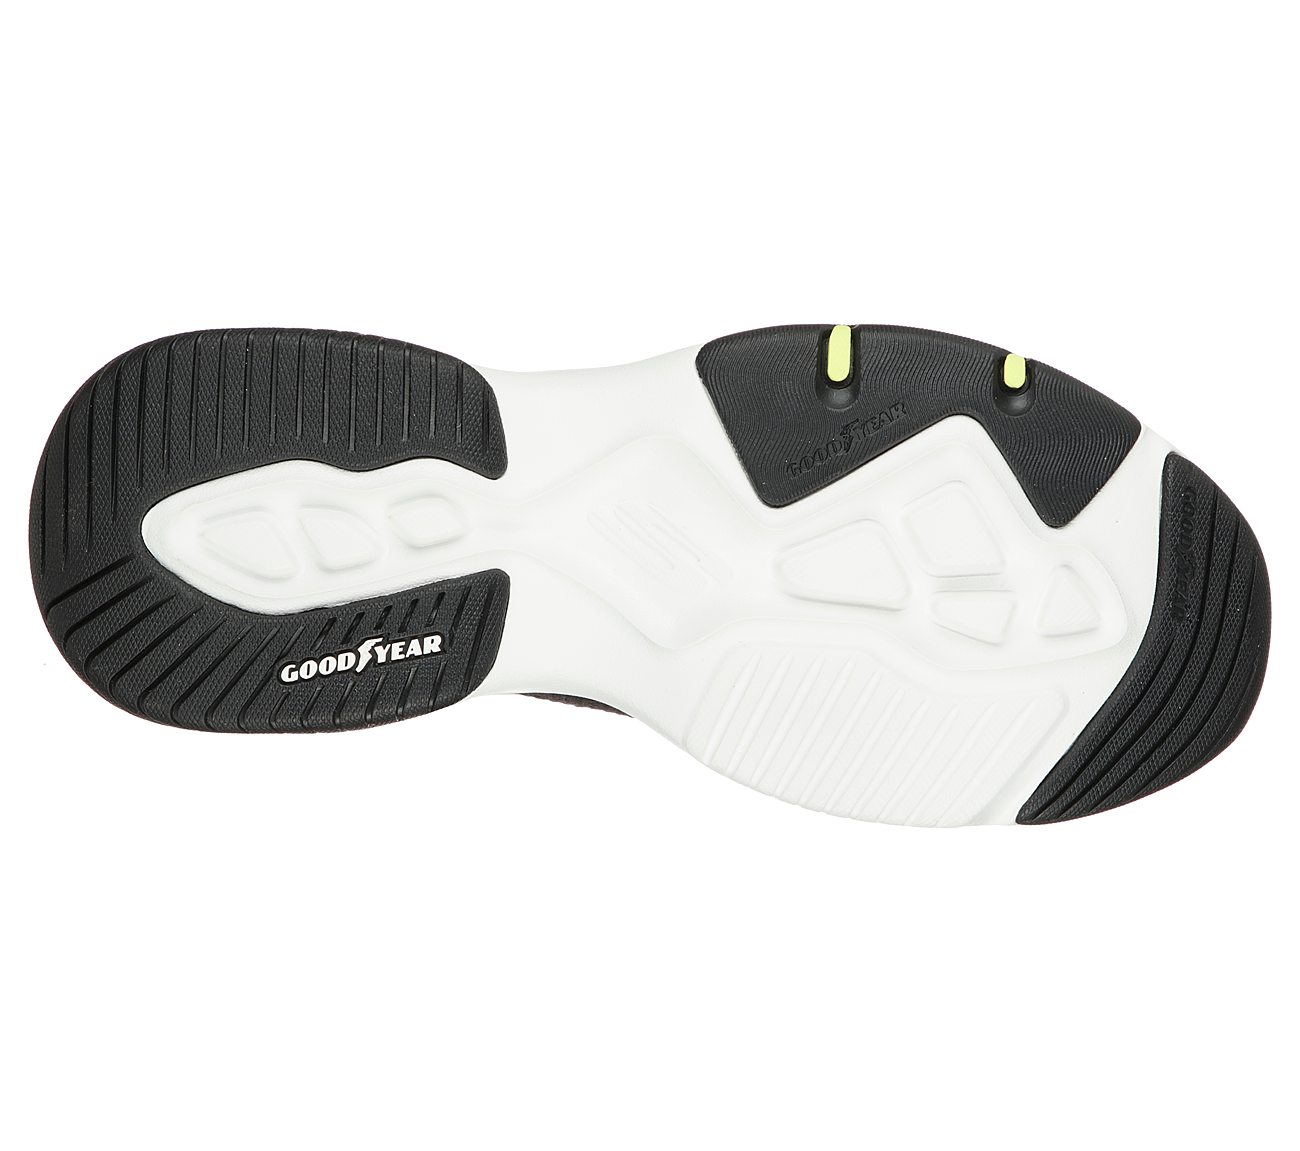 D'LITES 4.0-PERFECT FLOW, BLACK/WHITE Footwear Bottom View